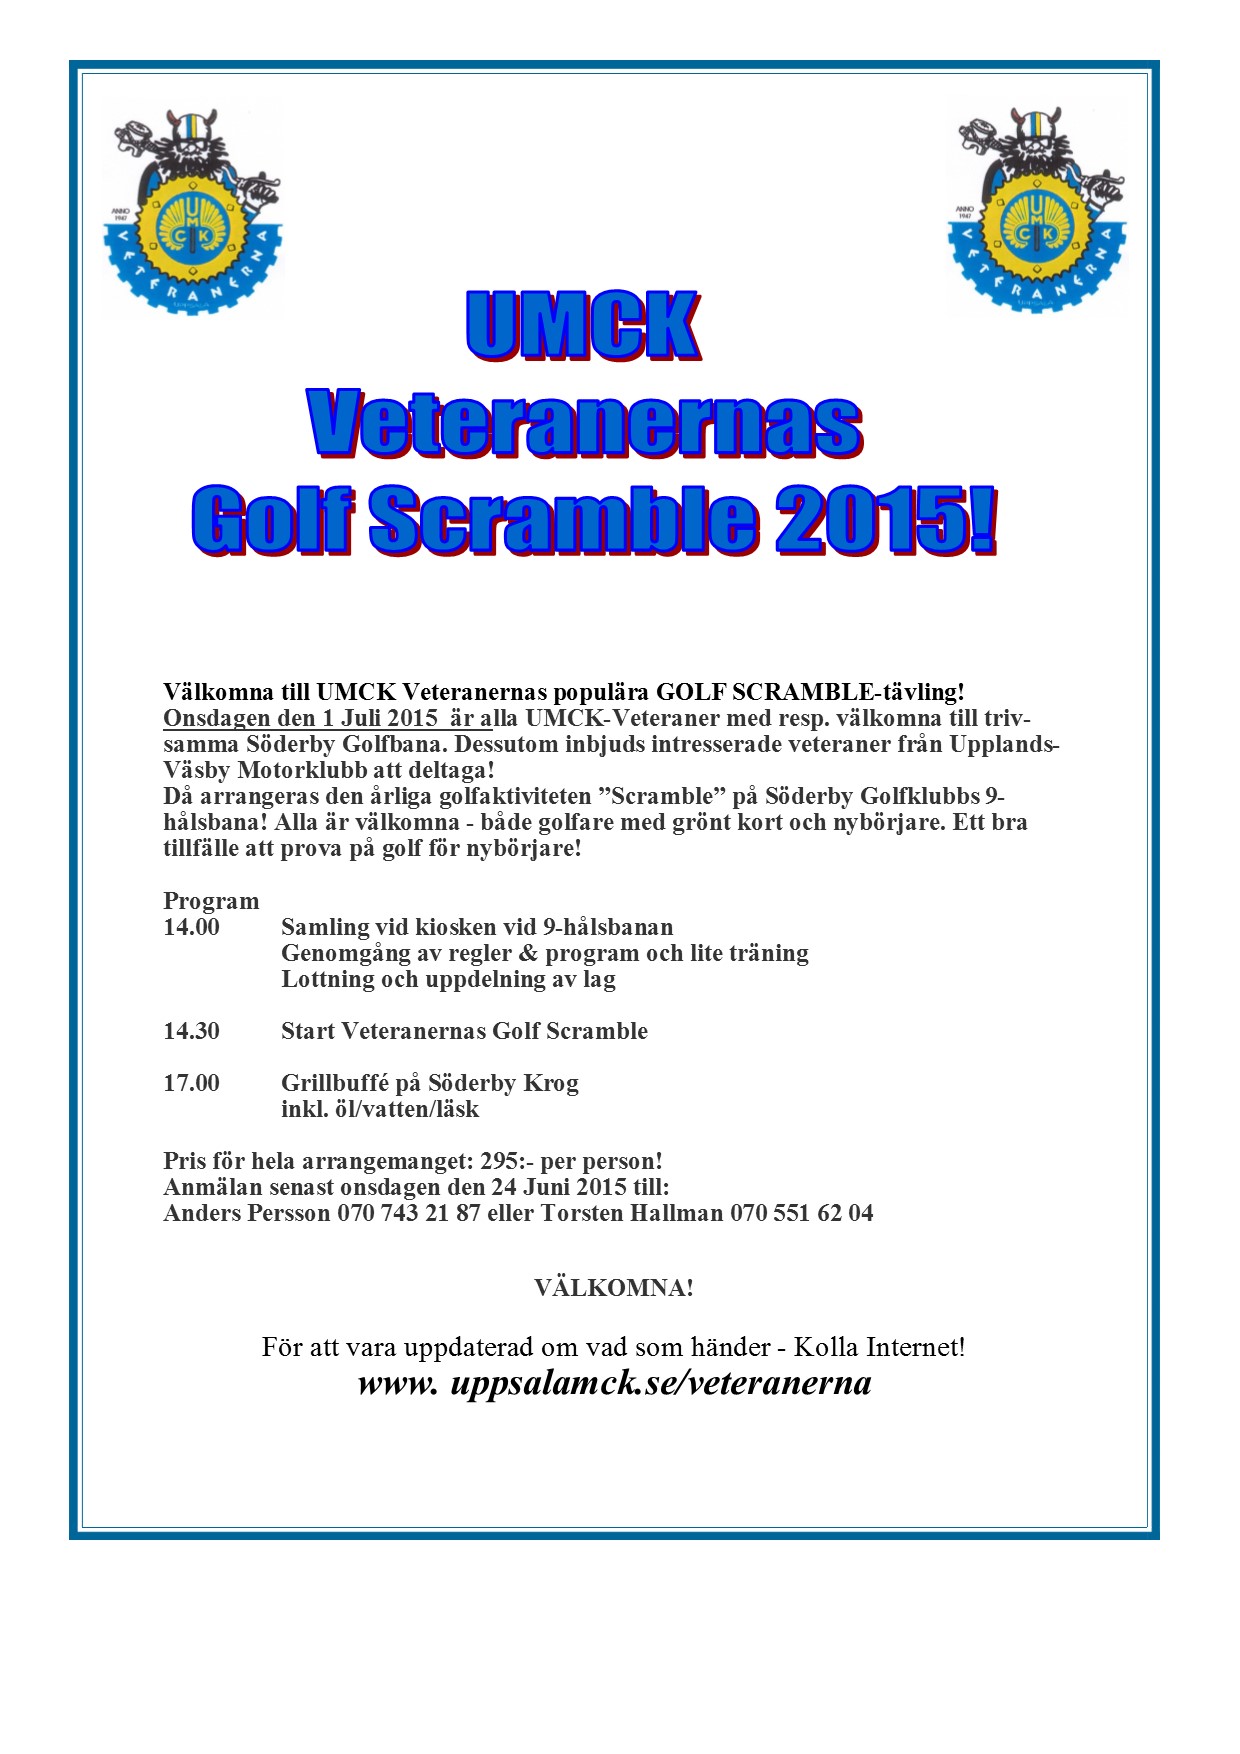 UMCK Golfinbjudan -15